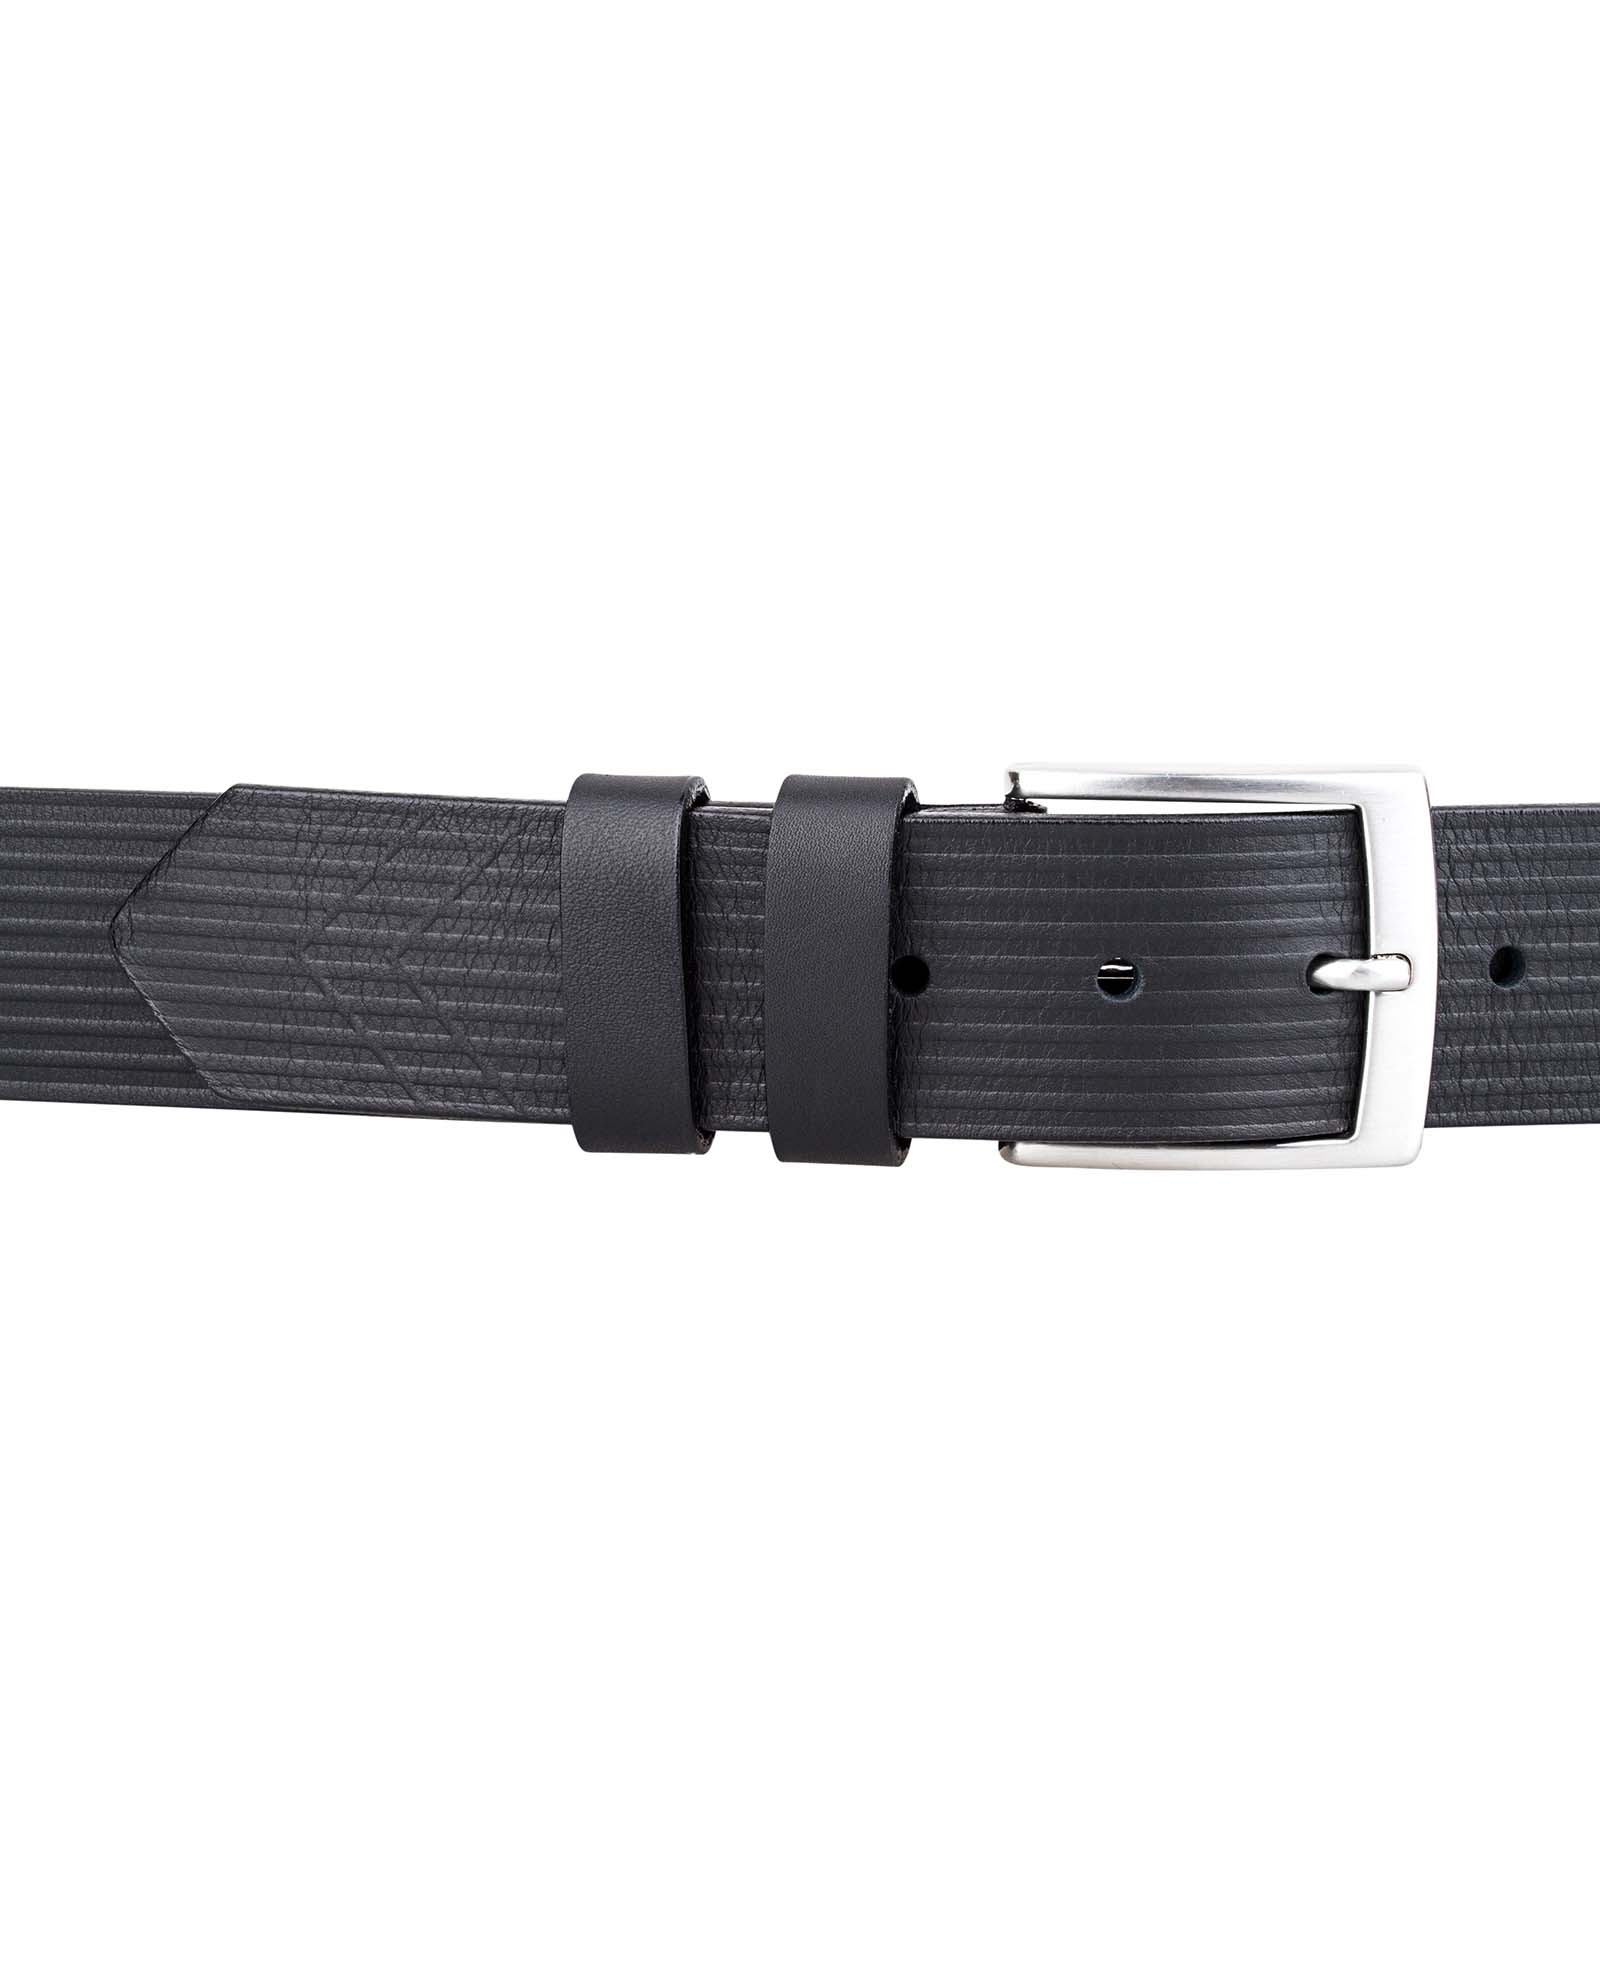 Buy Black Full Grain Leather Belt | 1 1/2 inch Wide | Leather Belts www.semadata.org